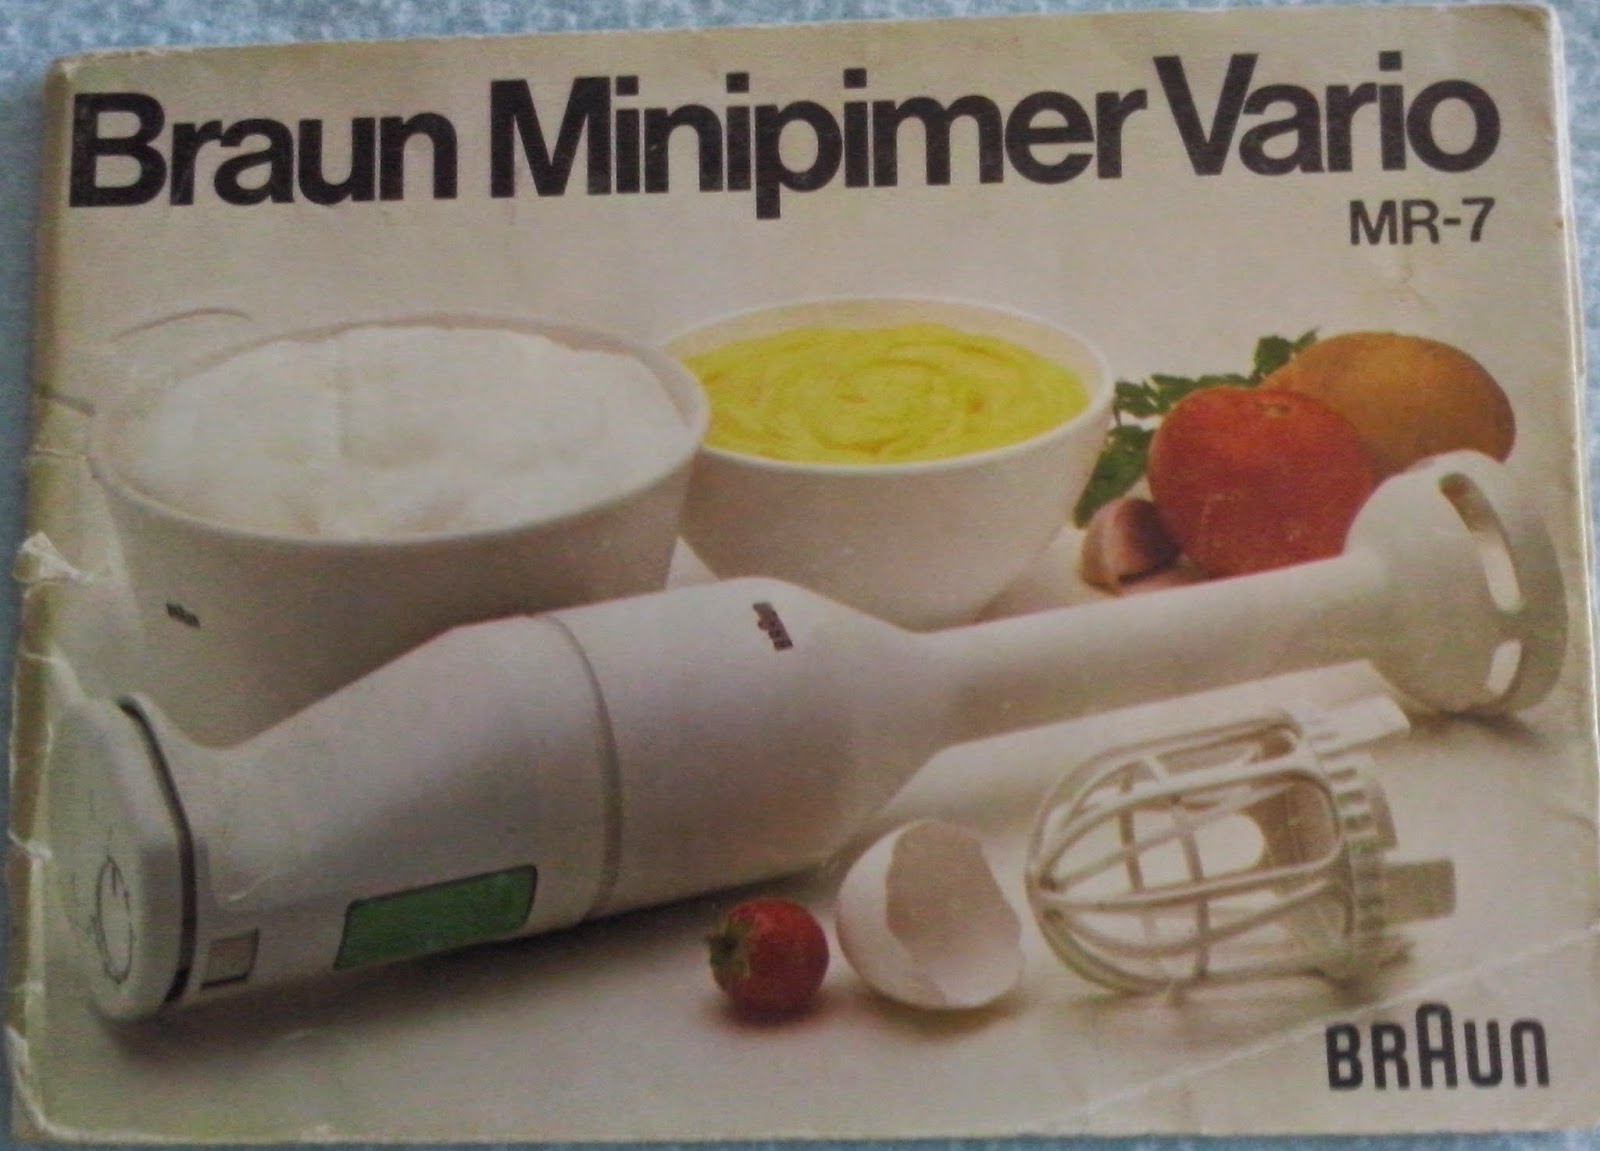 Braun y el origen de la Minipimer - BrandStocker